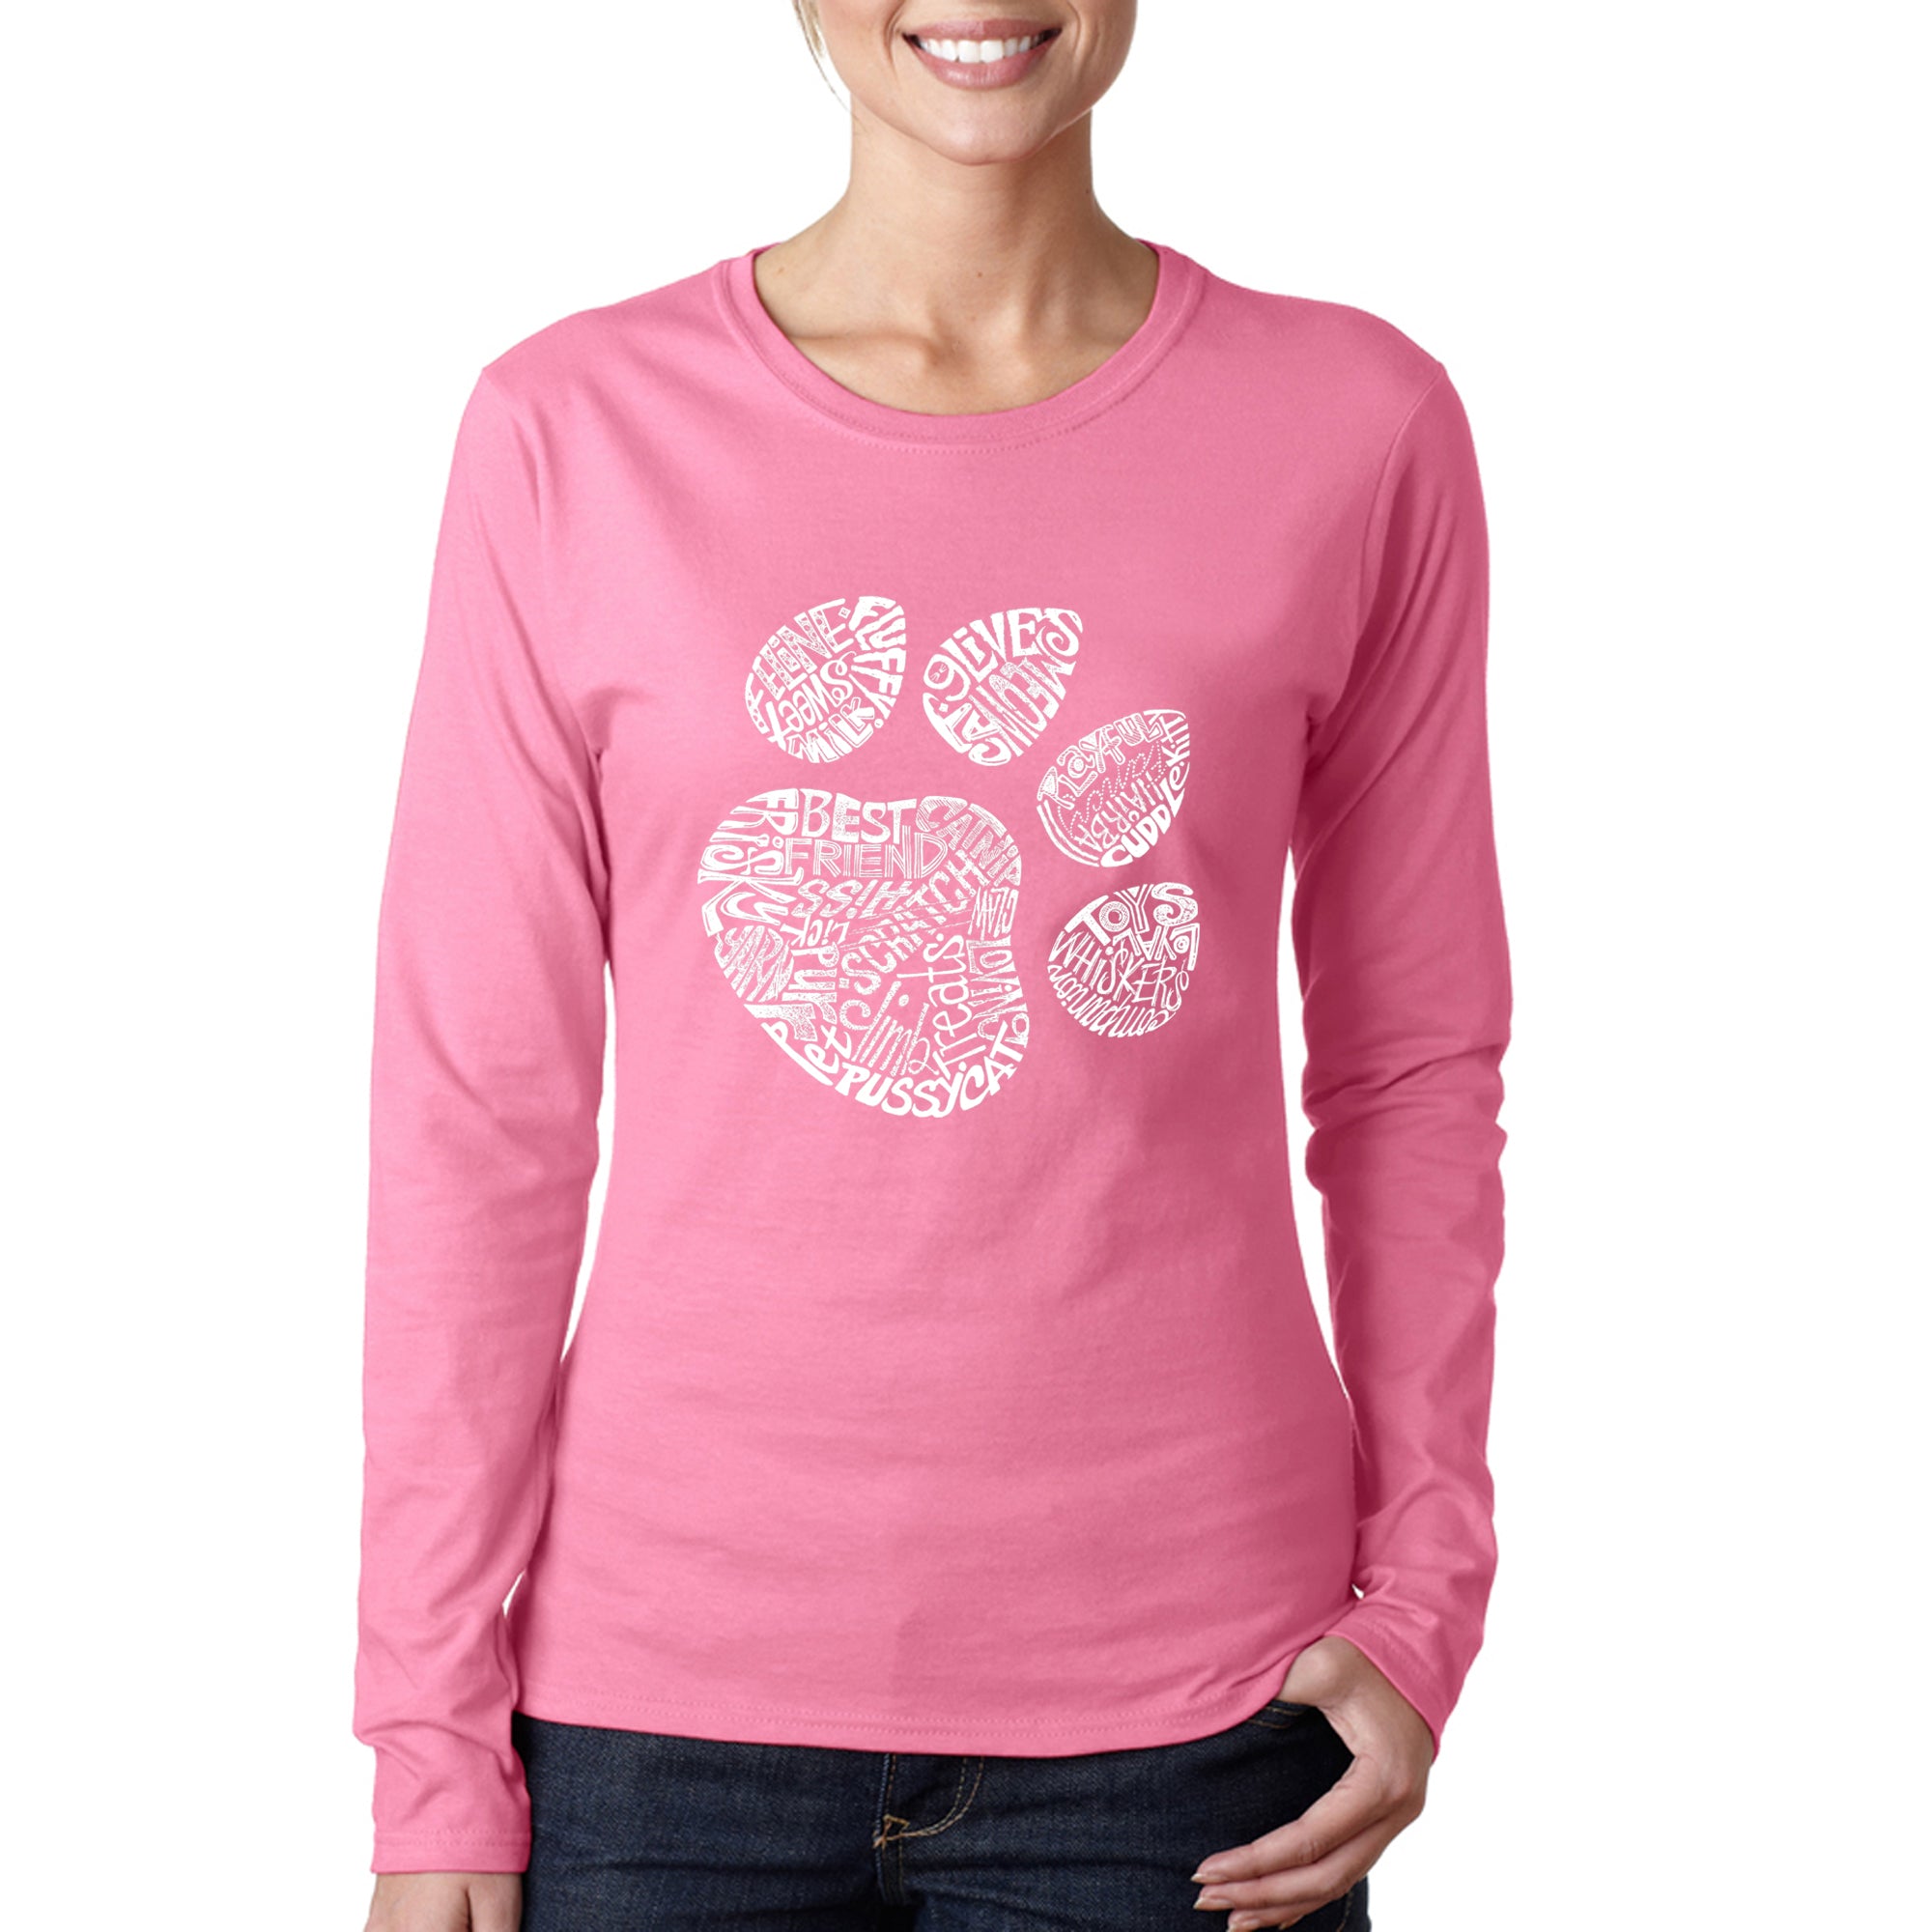 Cat Paw - Women's Word Art Long Sleeve T-Shirt - Pink - X-Large